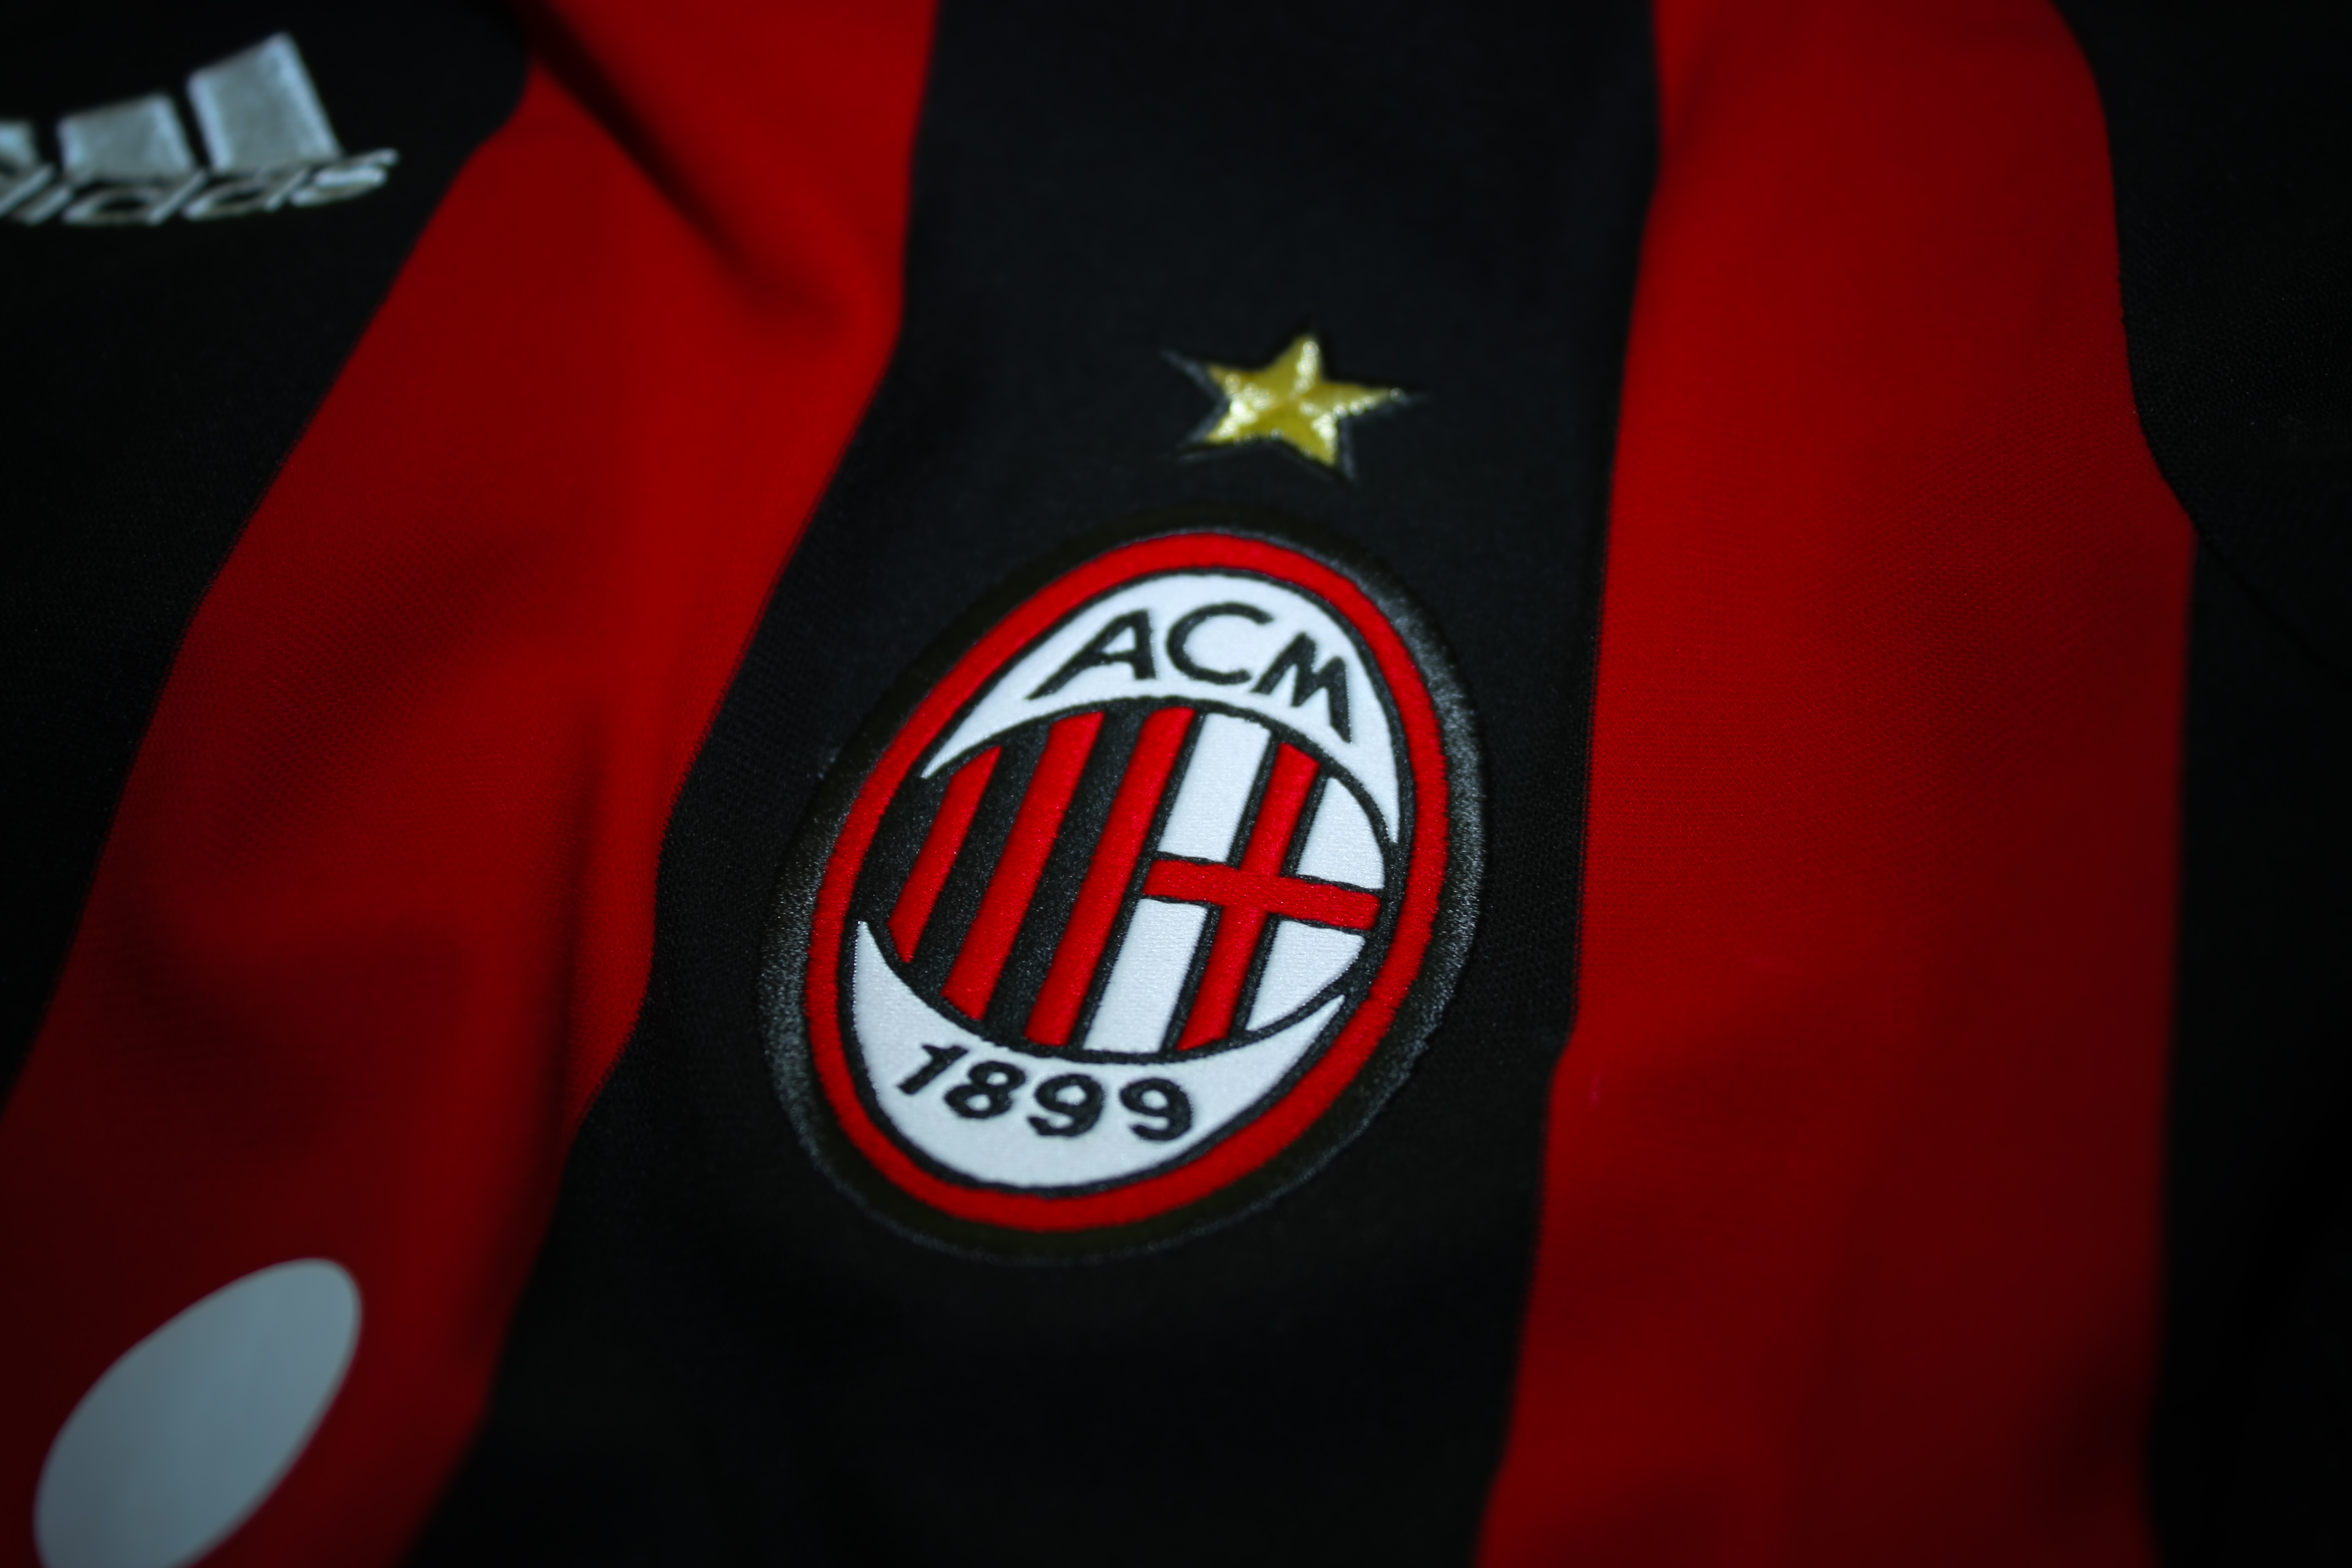 AC Milan - Flickr - Photo Sharing!